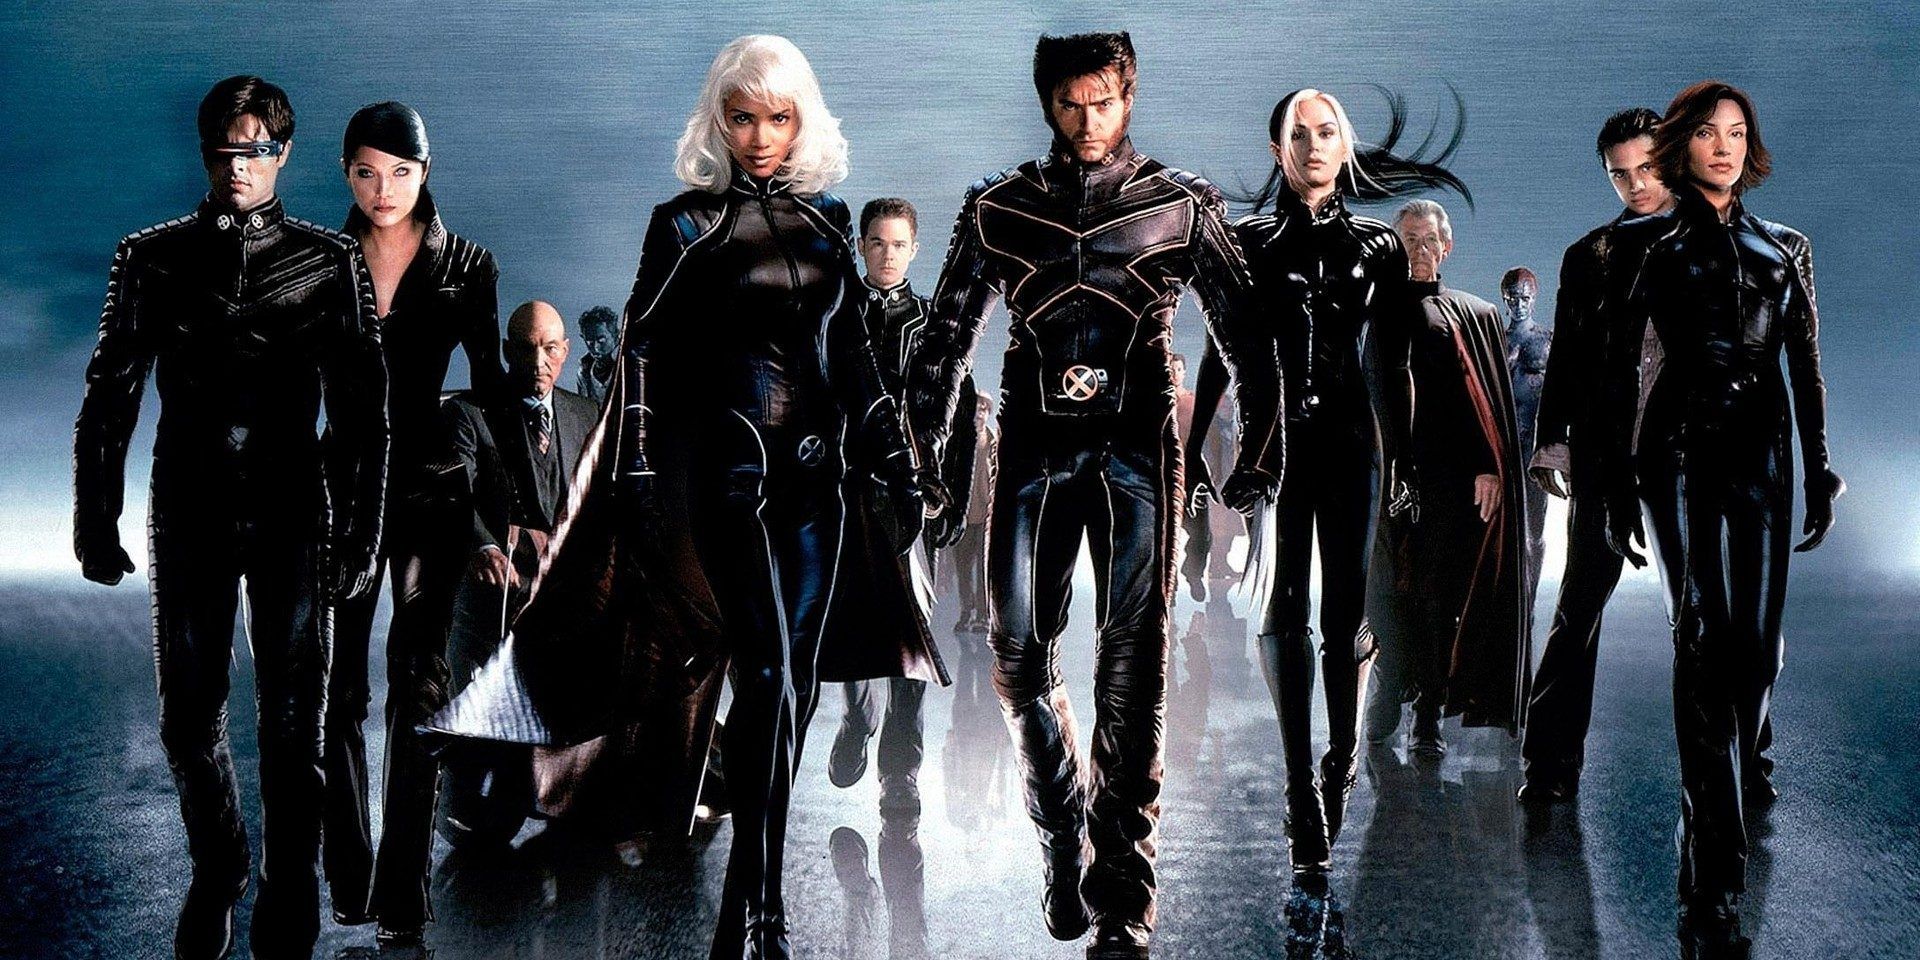 The cast of X-Men 2